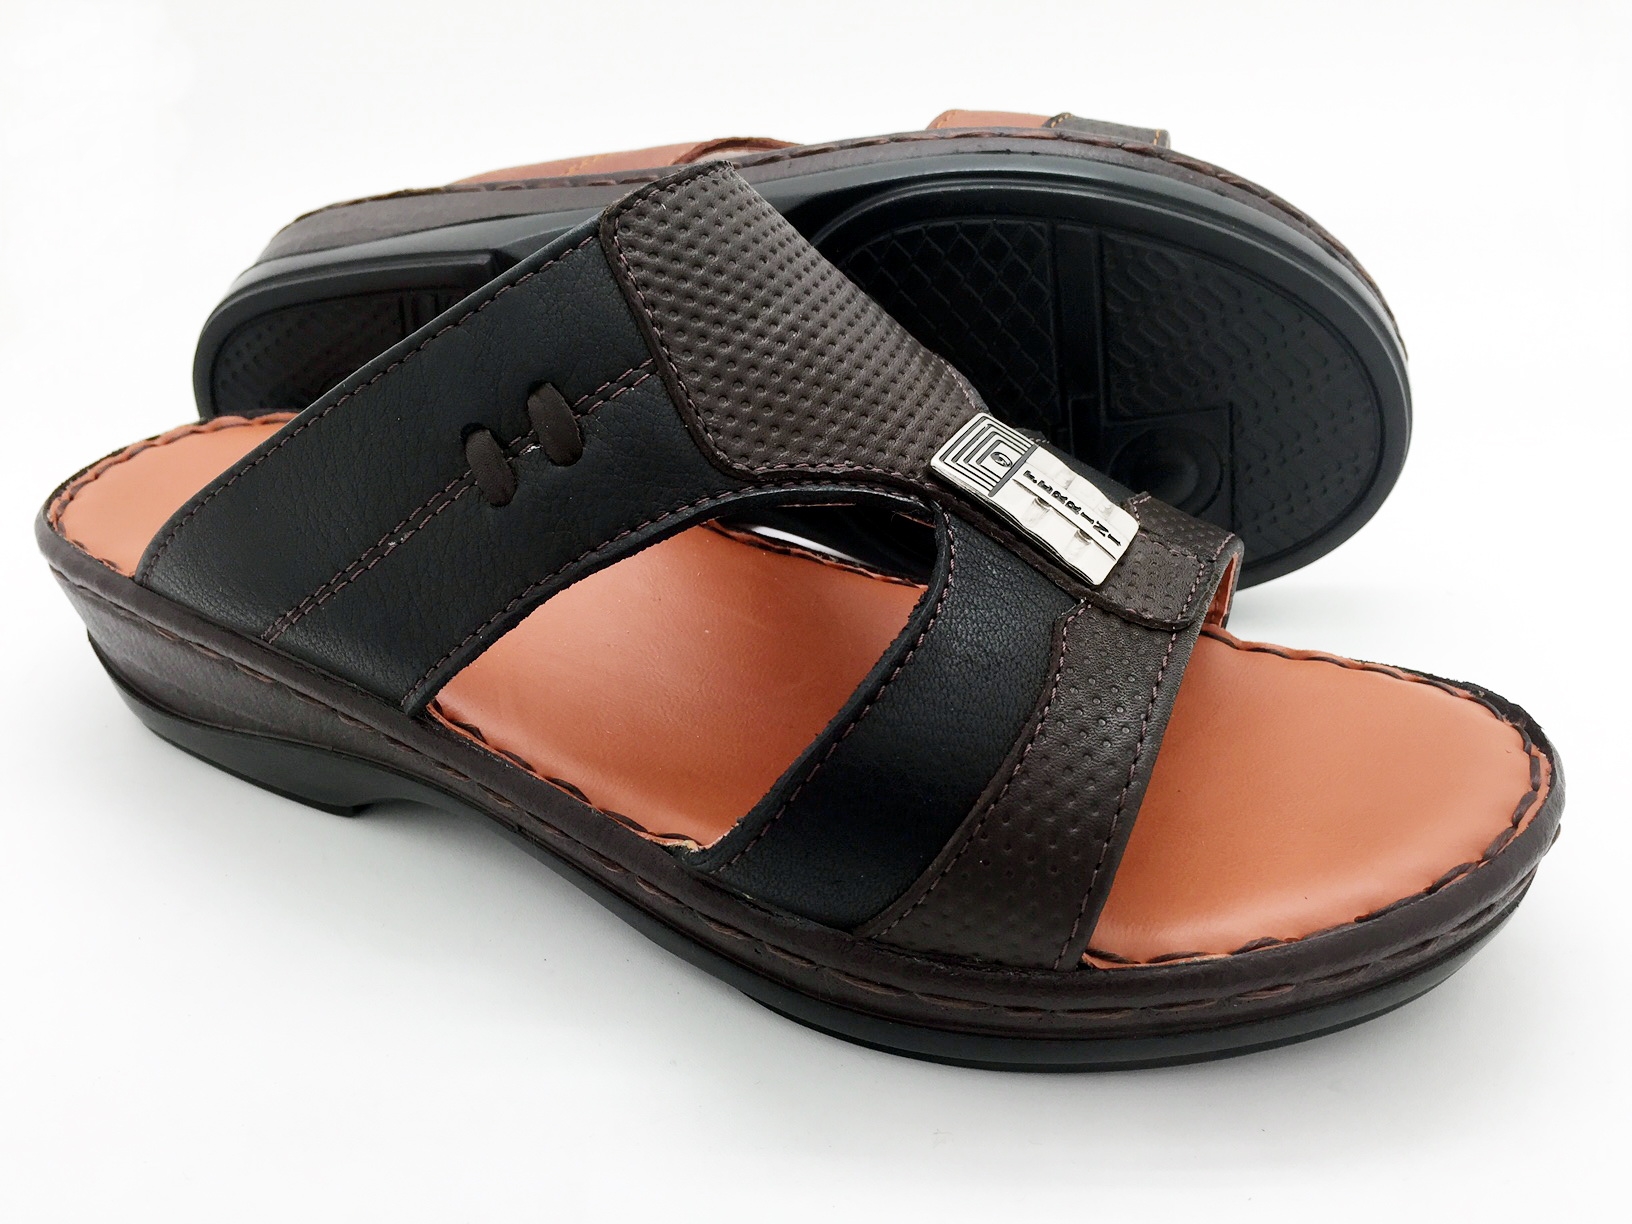 ARABIC SANDALS - Thailand High Quality Sandals Supplier or ...